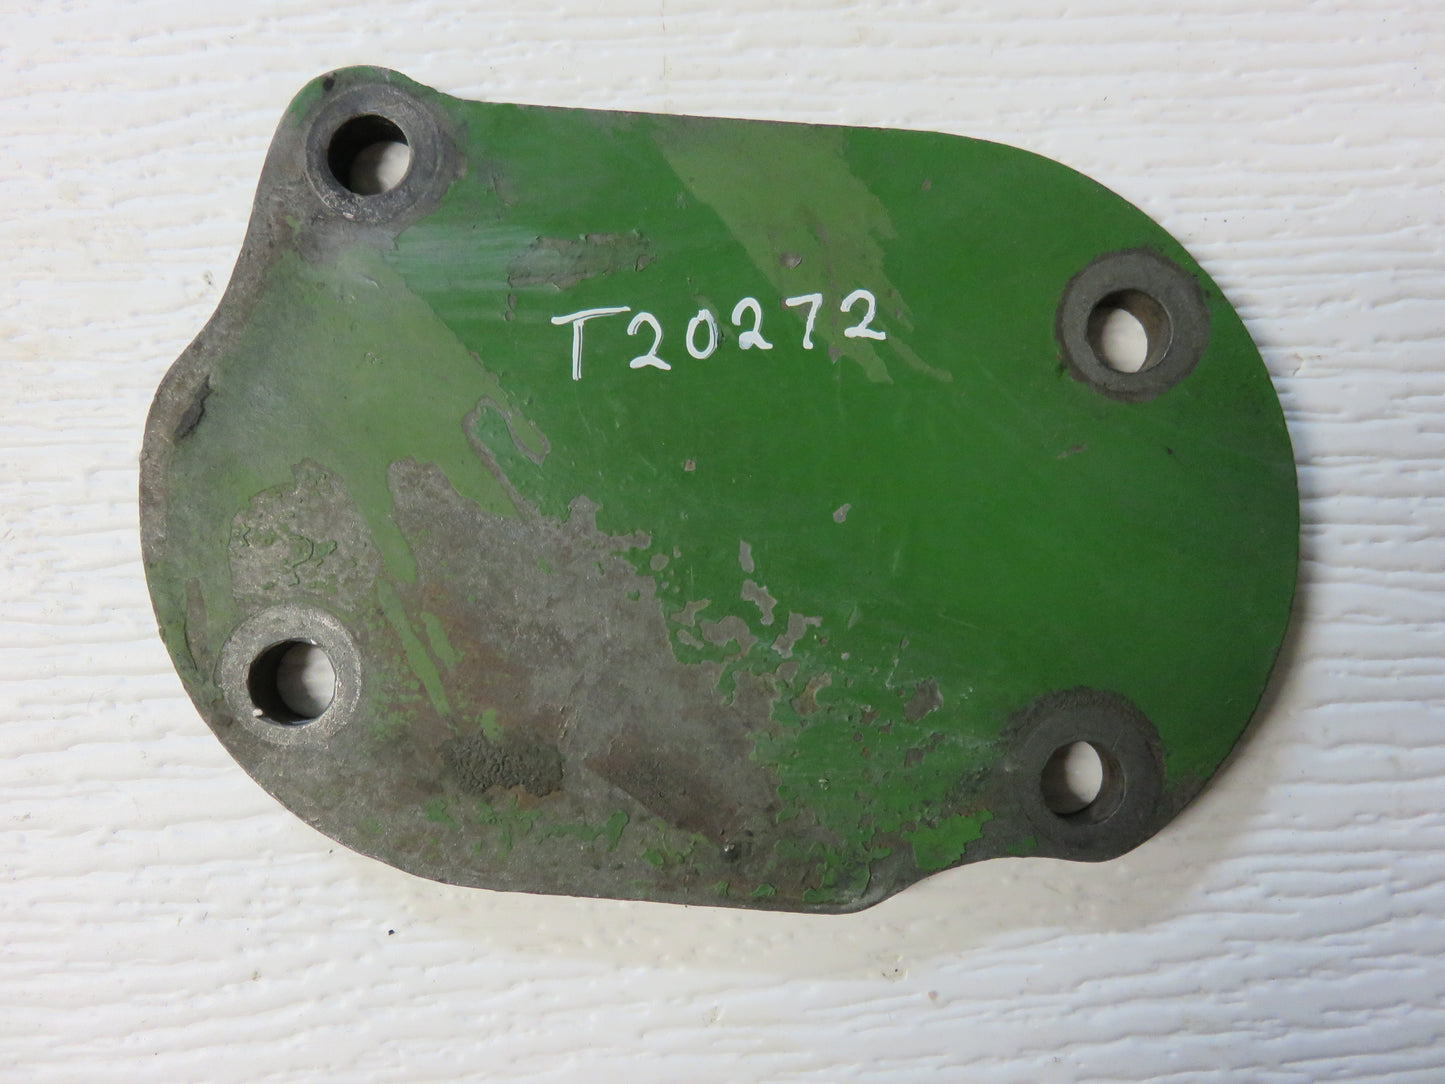 T20272 John Deere Timing Gear Cover For 1020, 1120, 1030, 1130, 1630, 1520, 1530